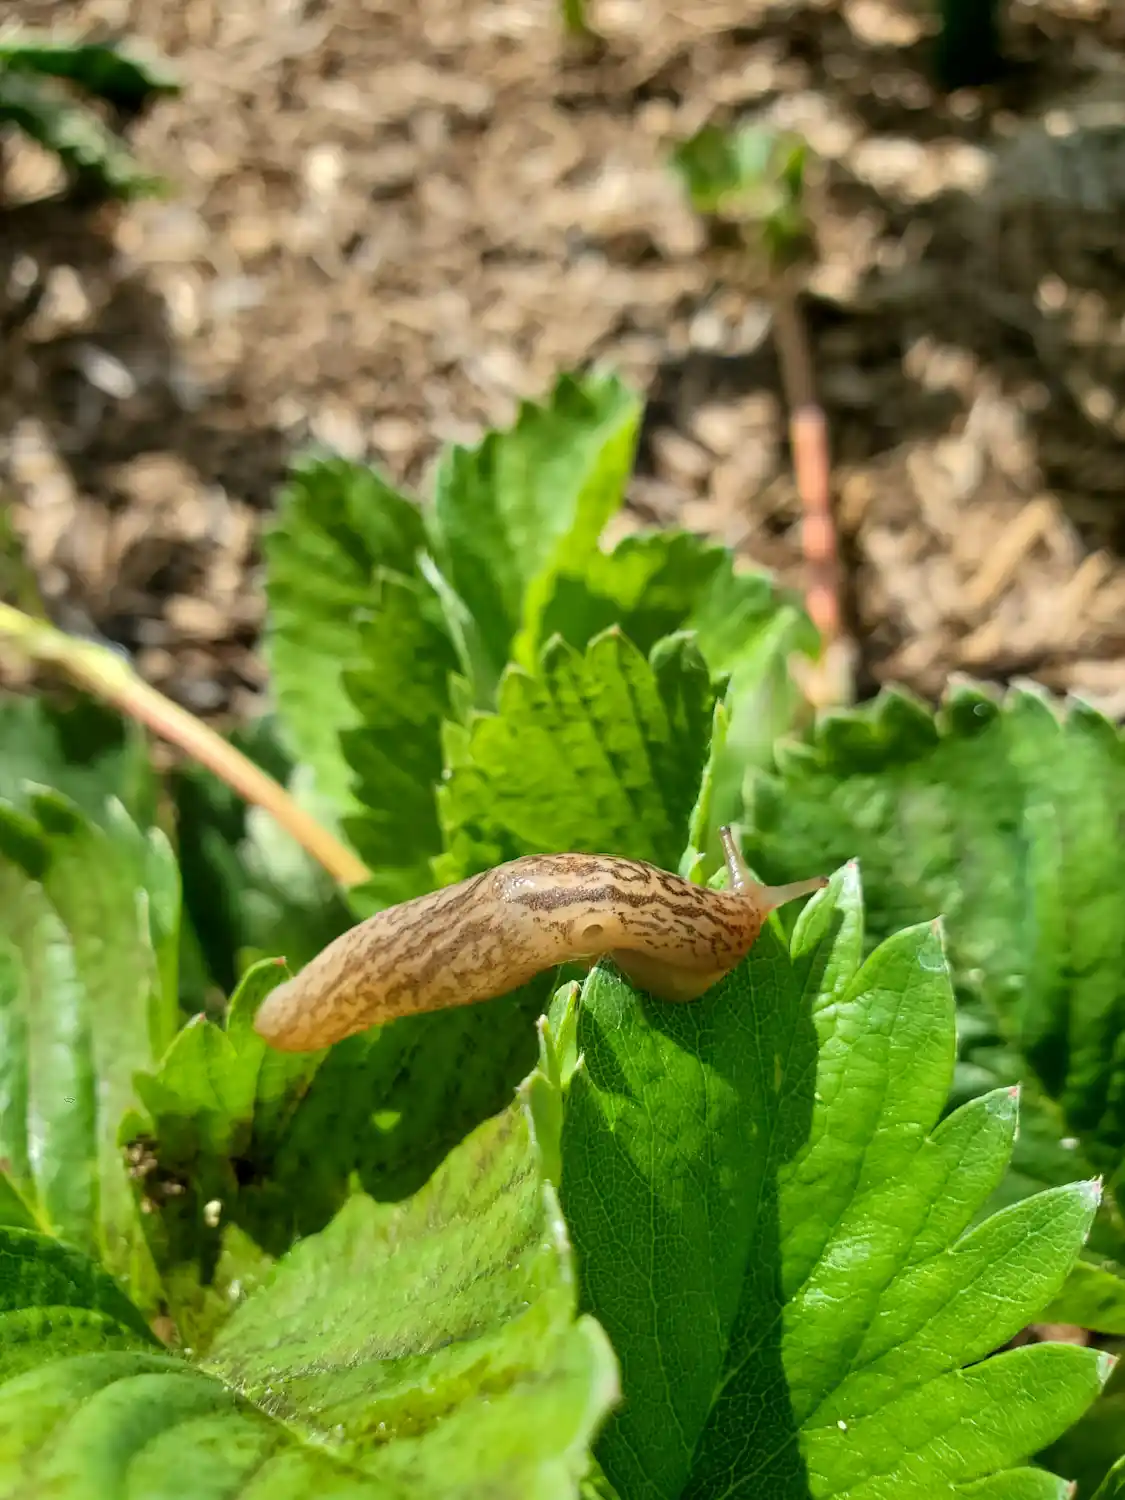 A close up image of a slug on top of a strawberry plant leaf.